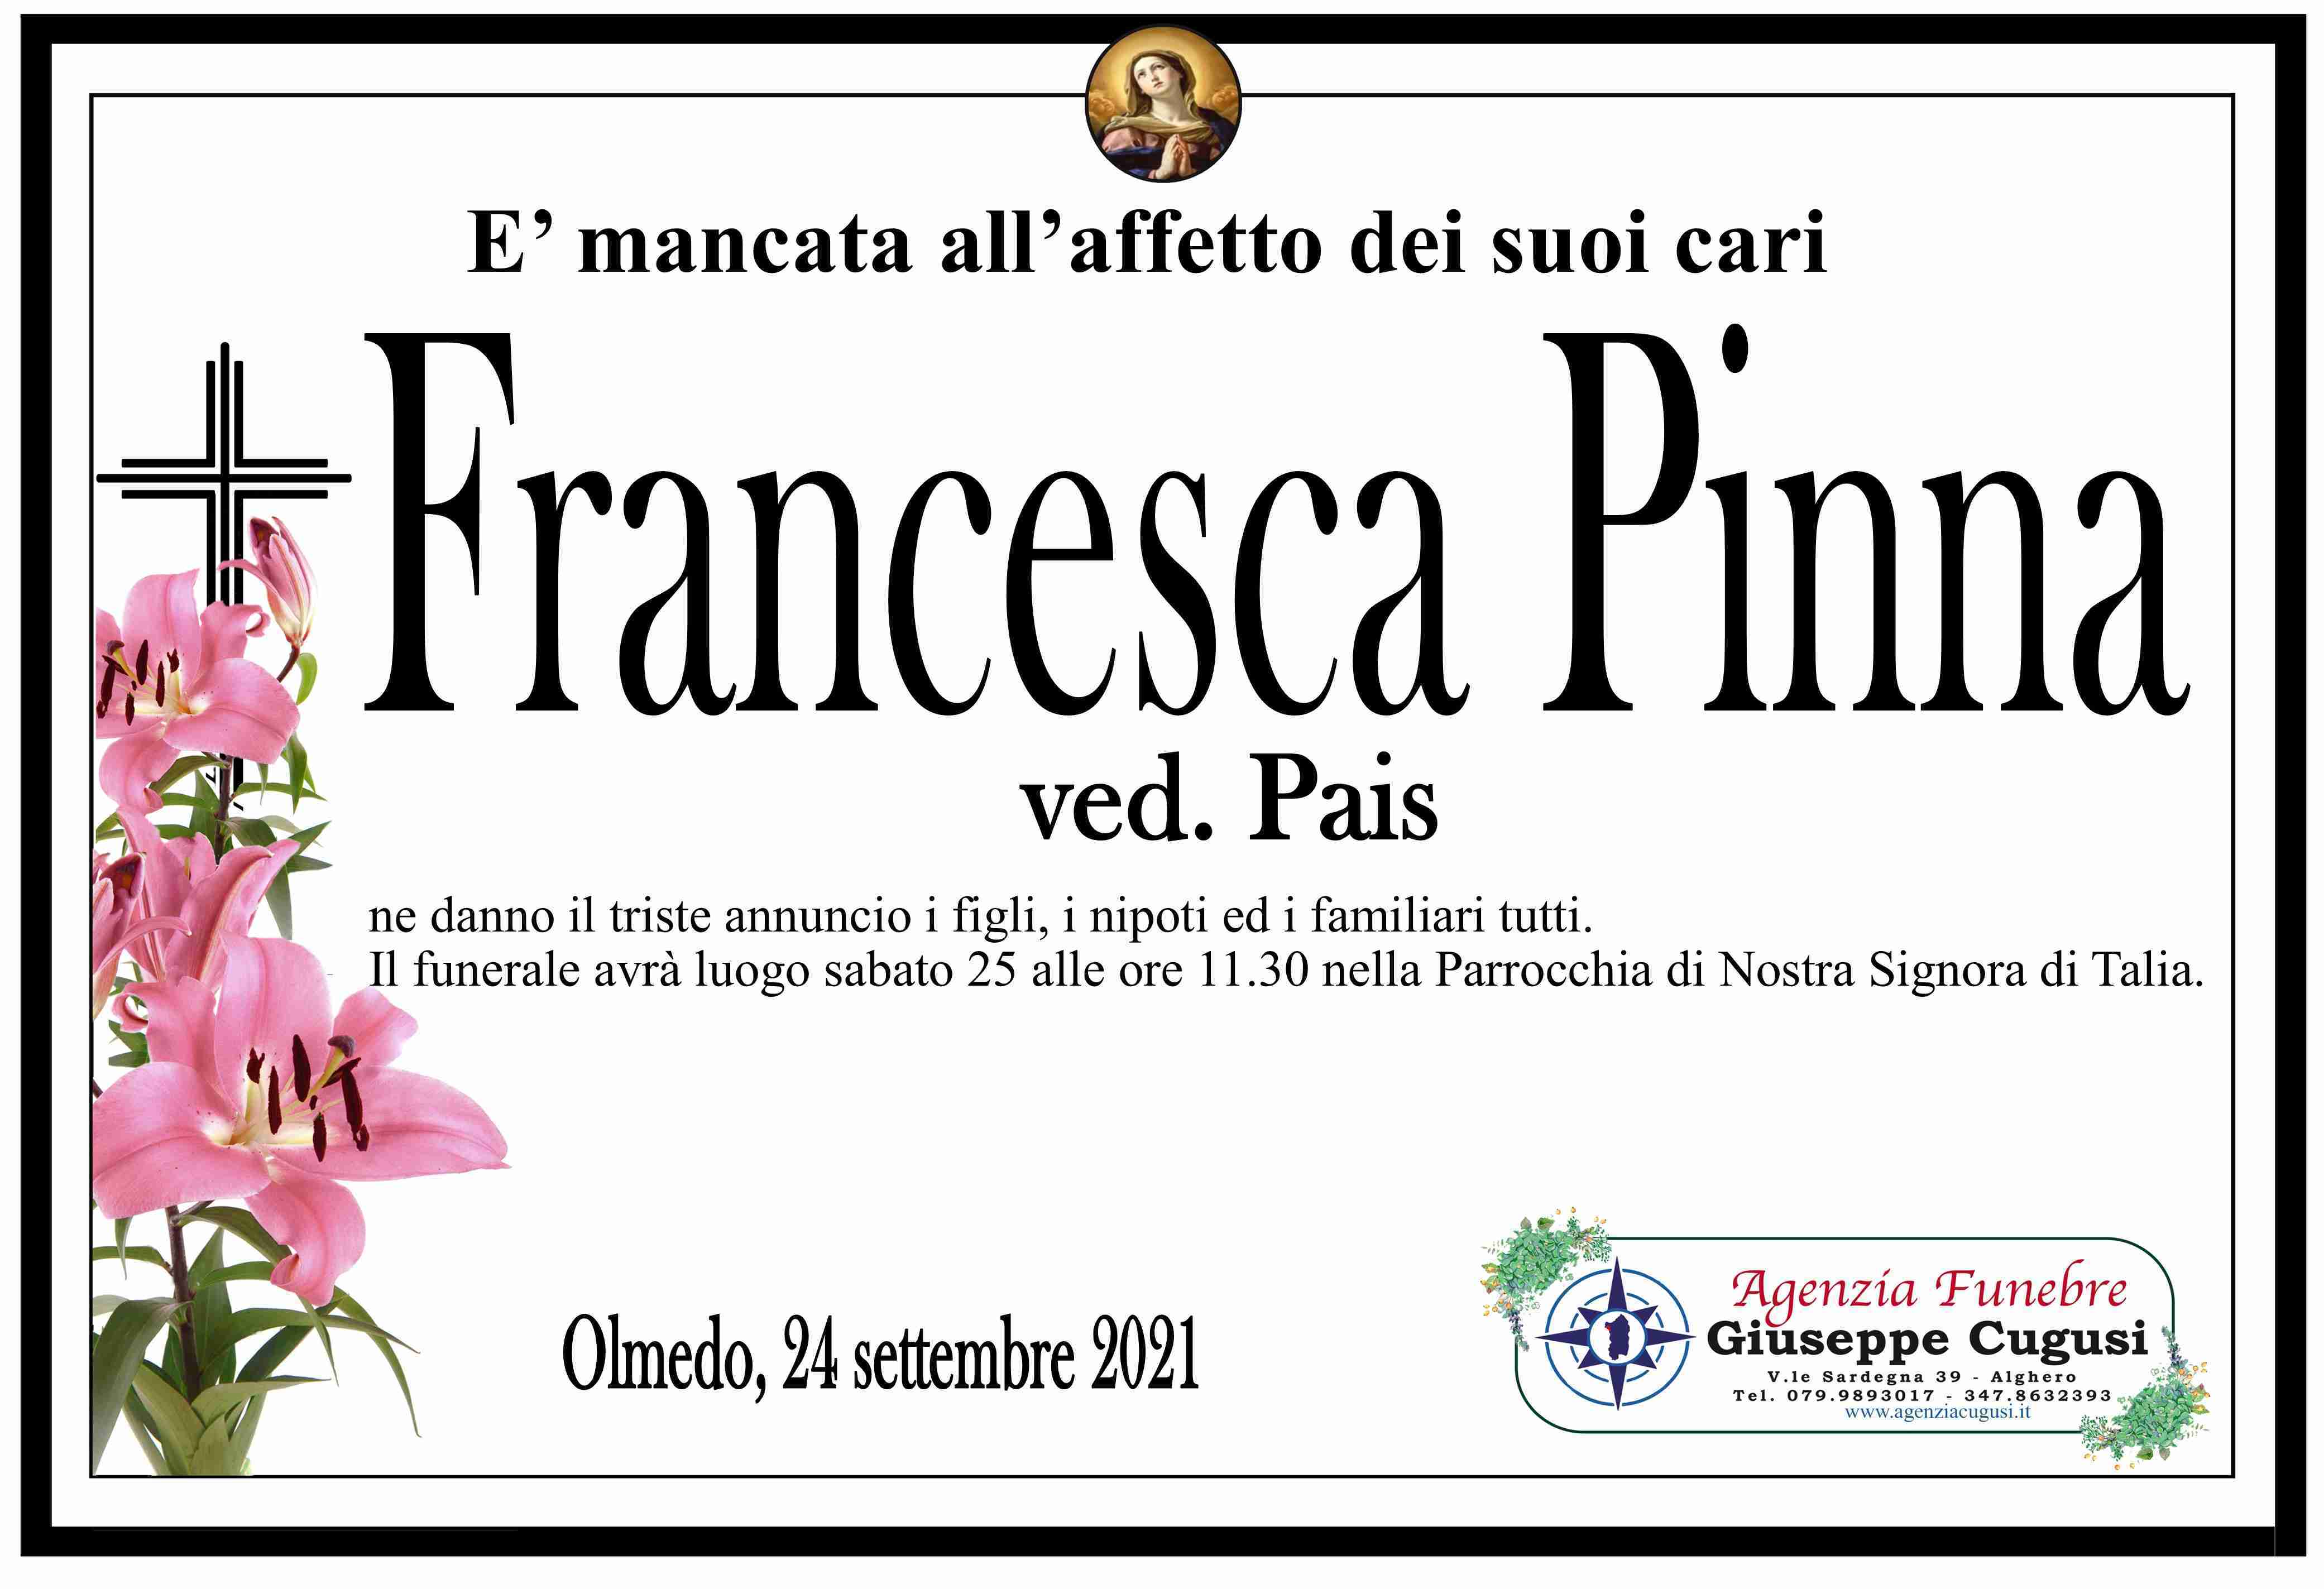 Francesca Pinna